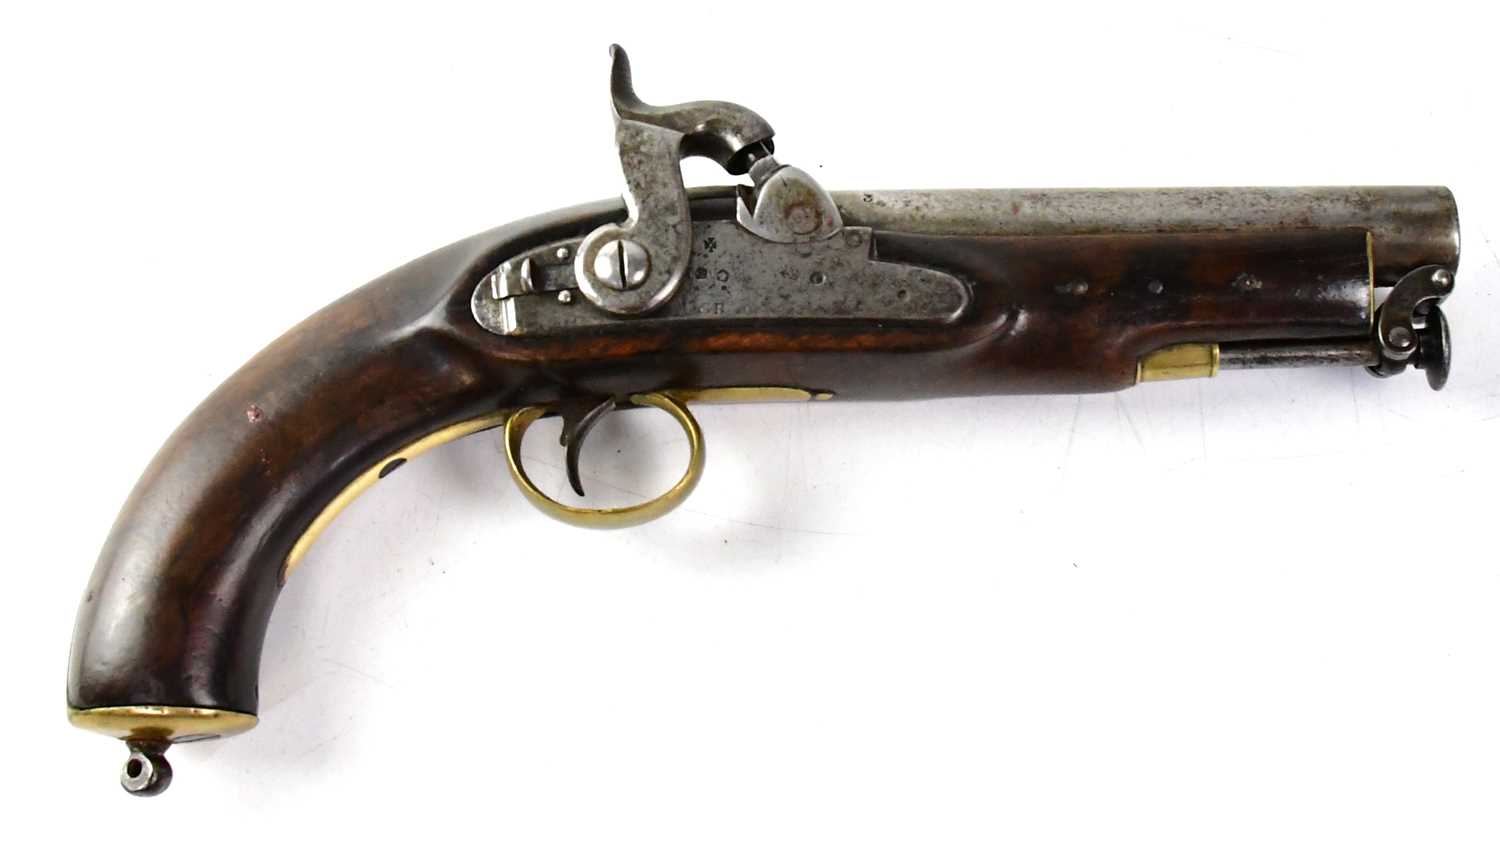 TOWER, LONDON; a 19th century 14 bore percussion cap short sea service pistol, 5.5" barrel with